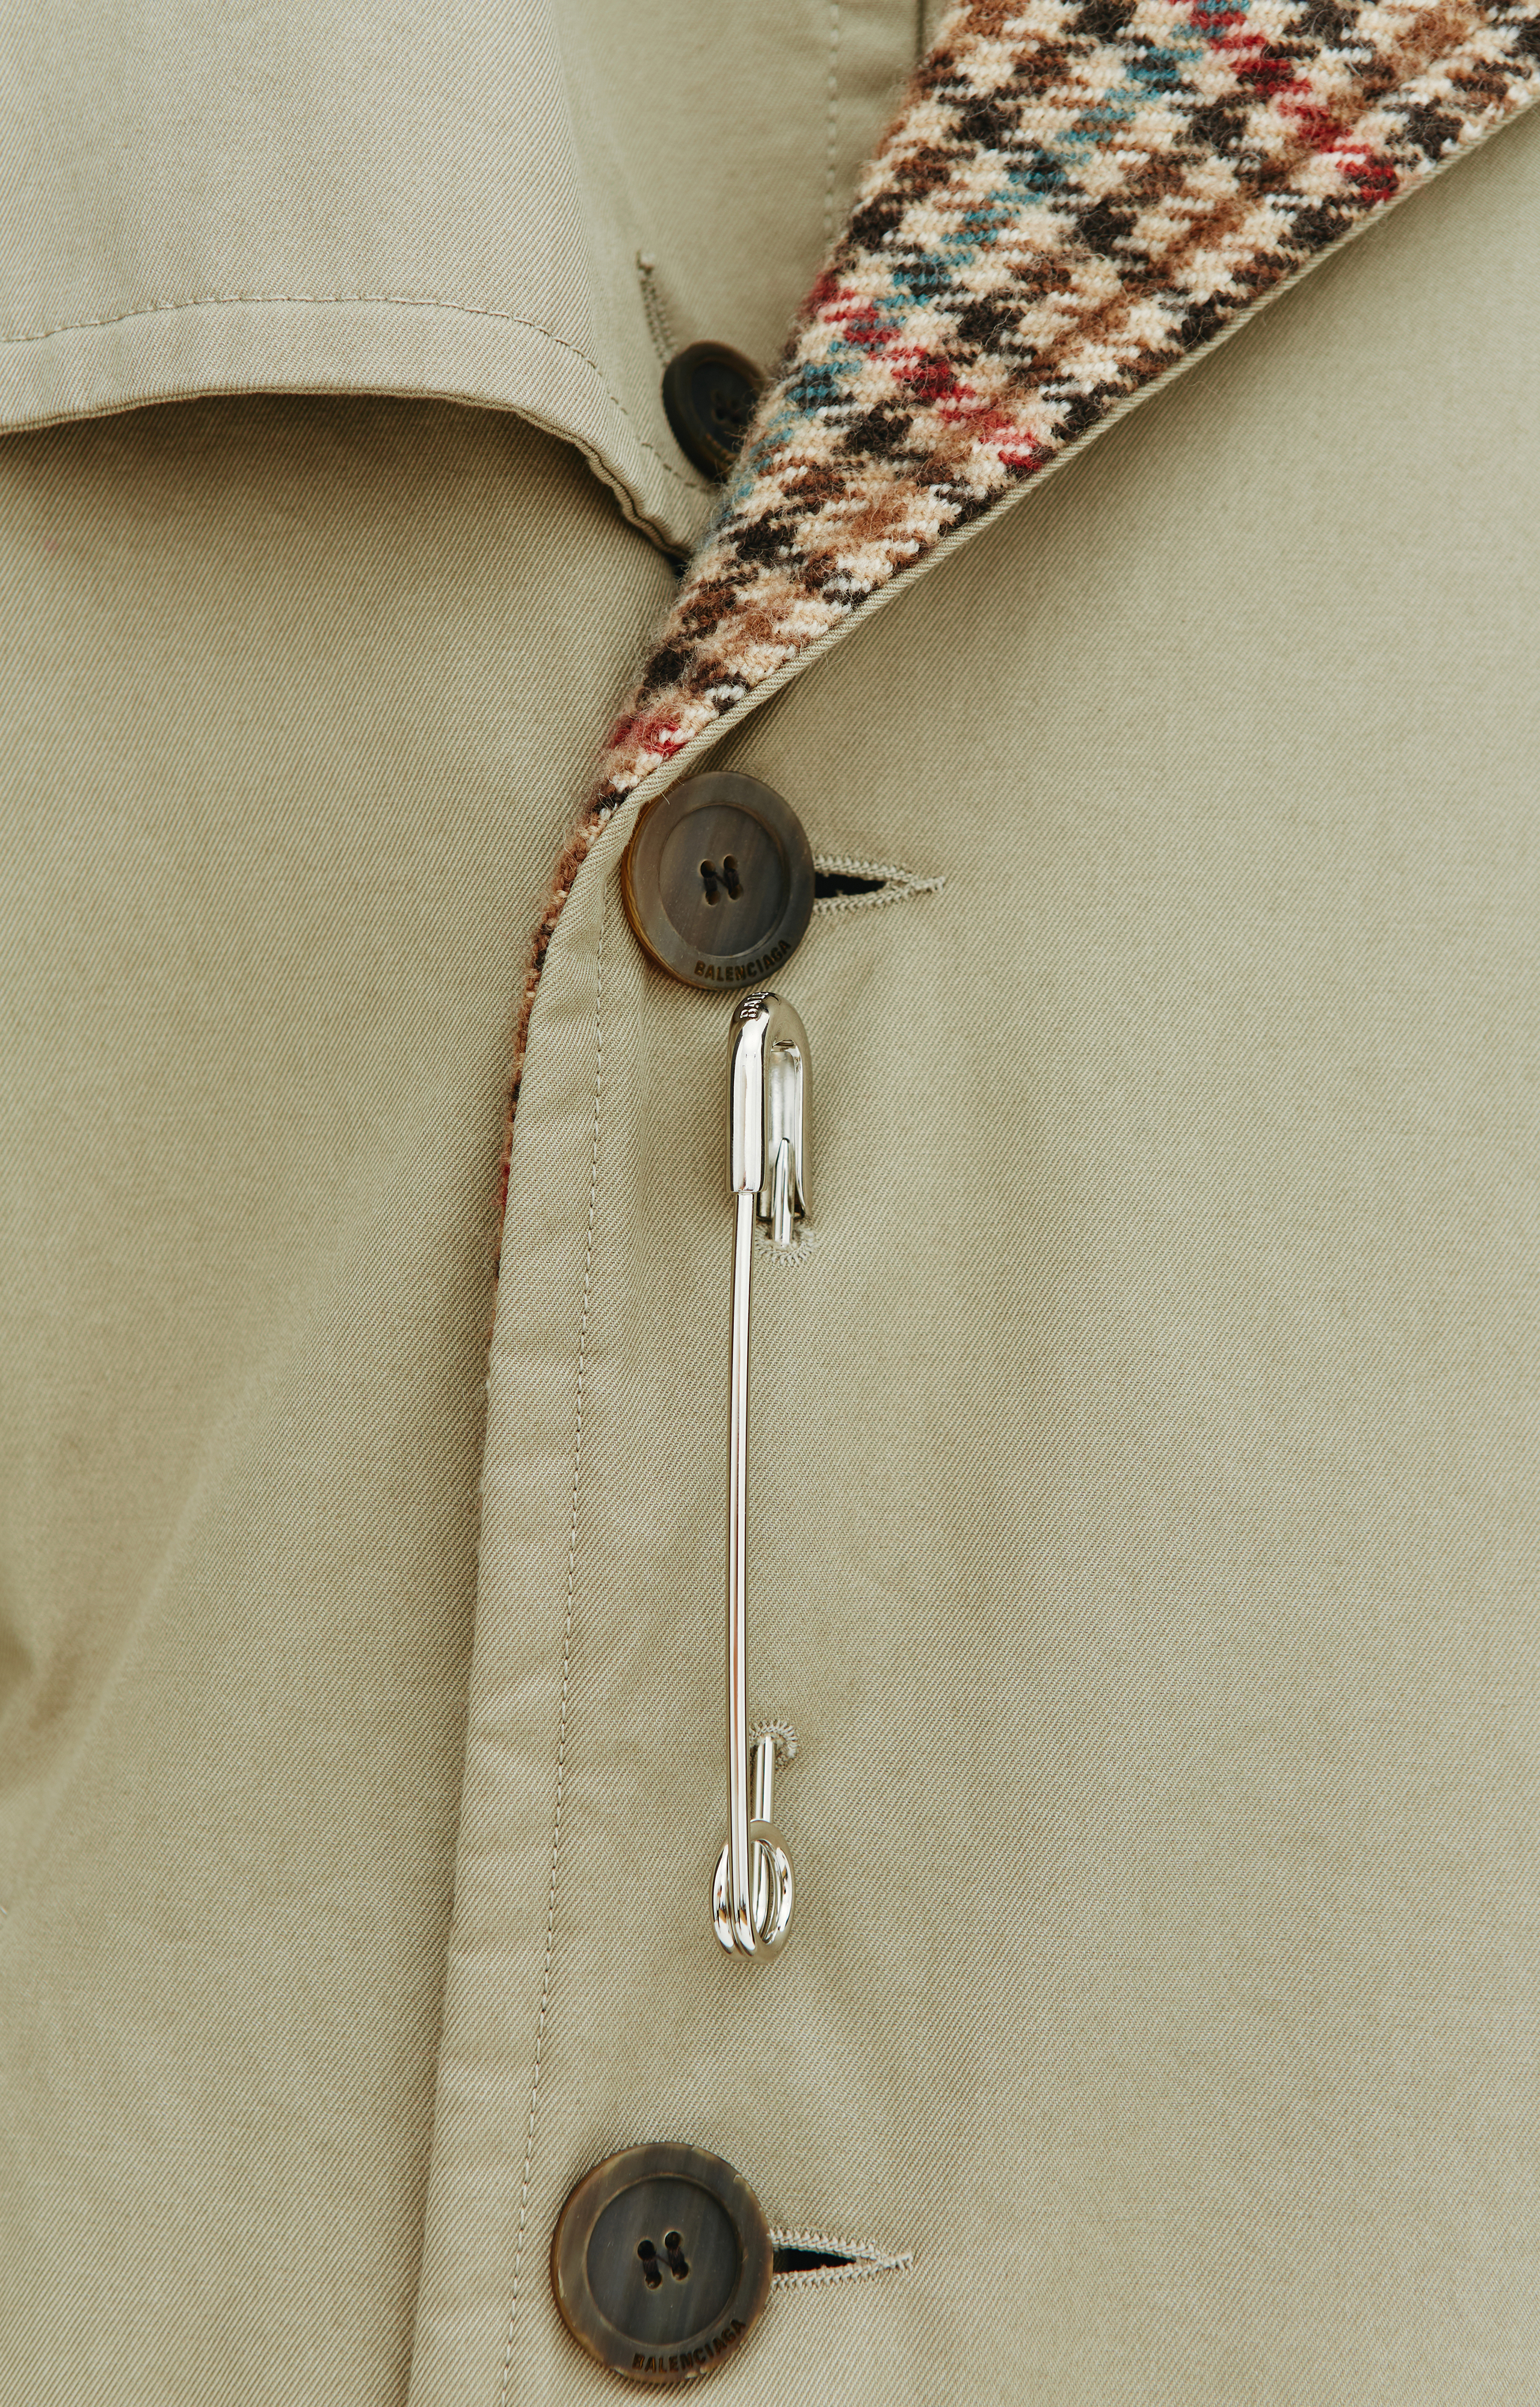 Balenciaga Men's Reversible Houndstooth Trench Coat